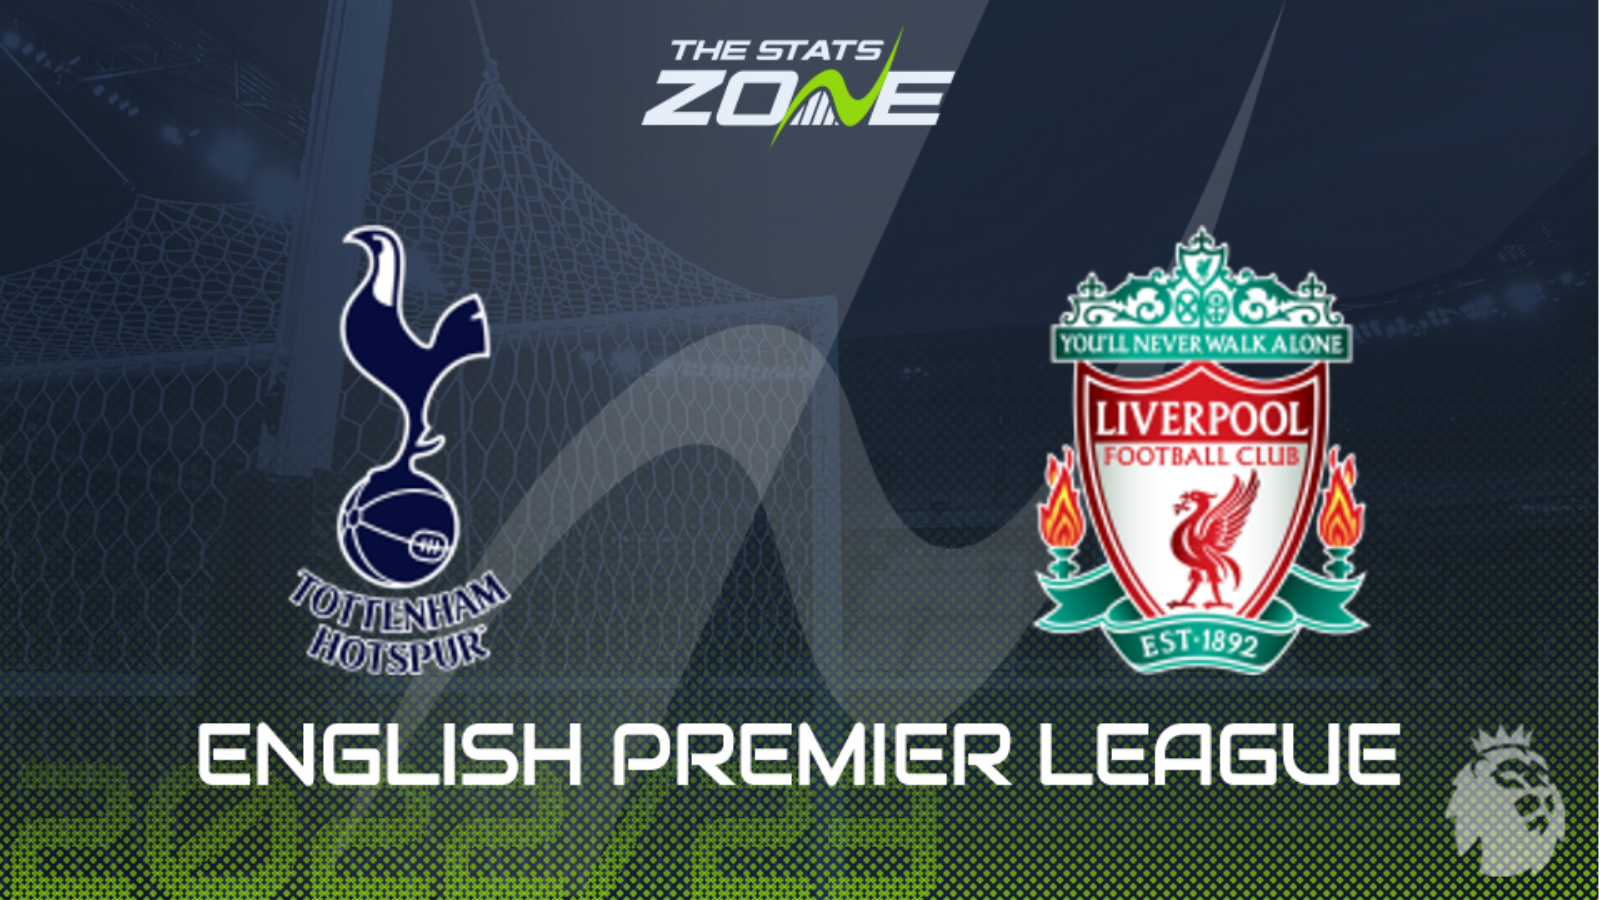 Tottenham vs Liverpool: Prediction and Preview